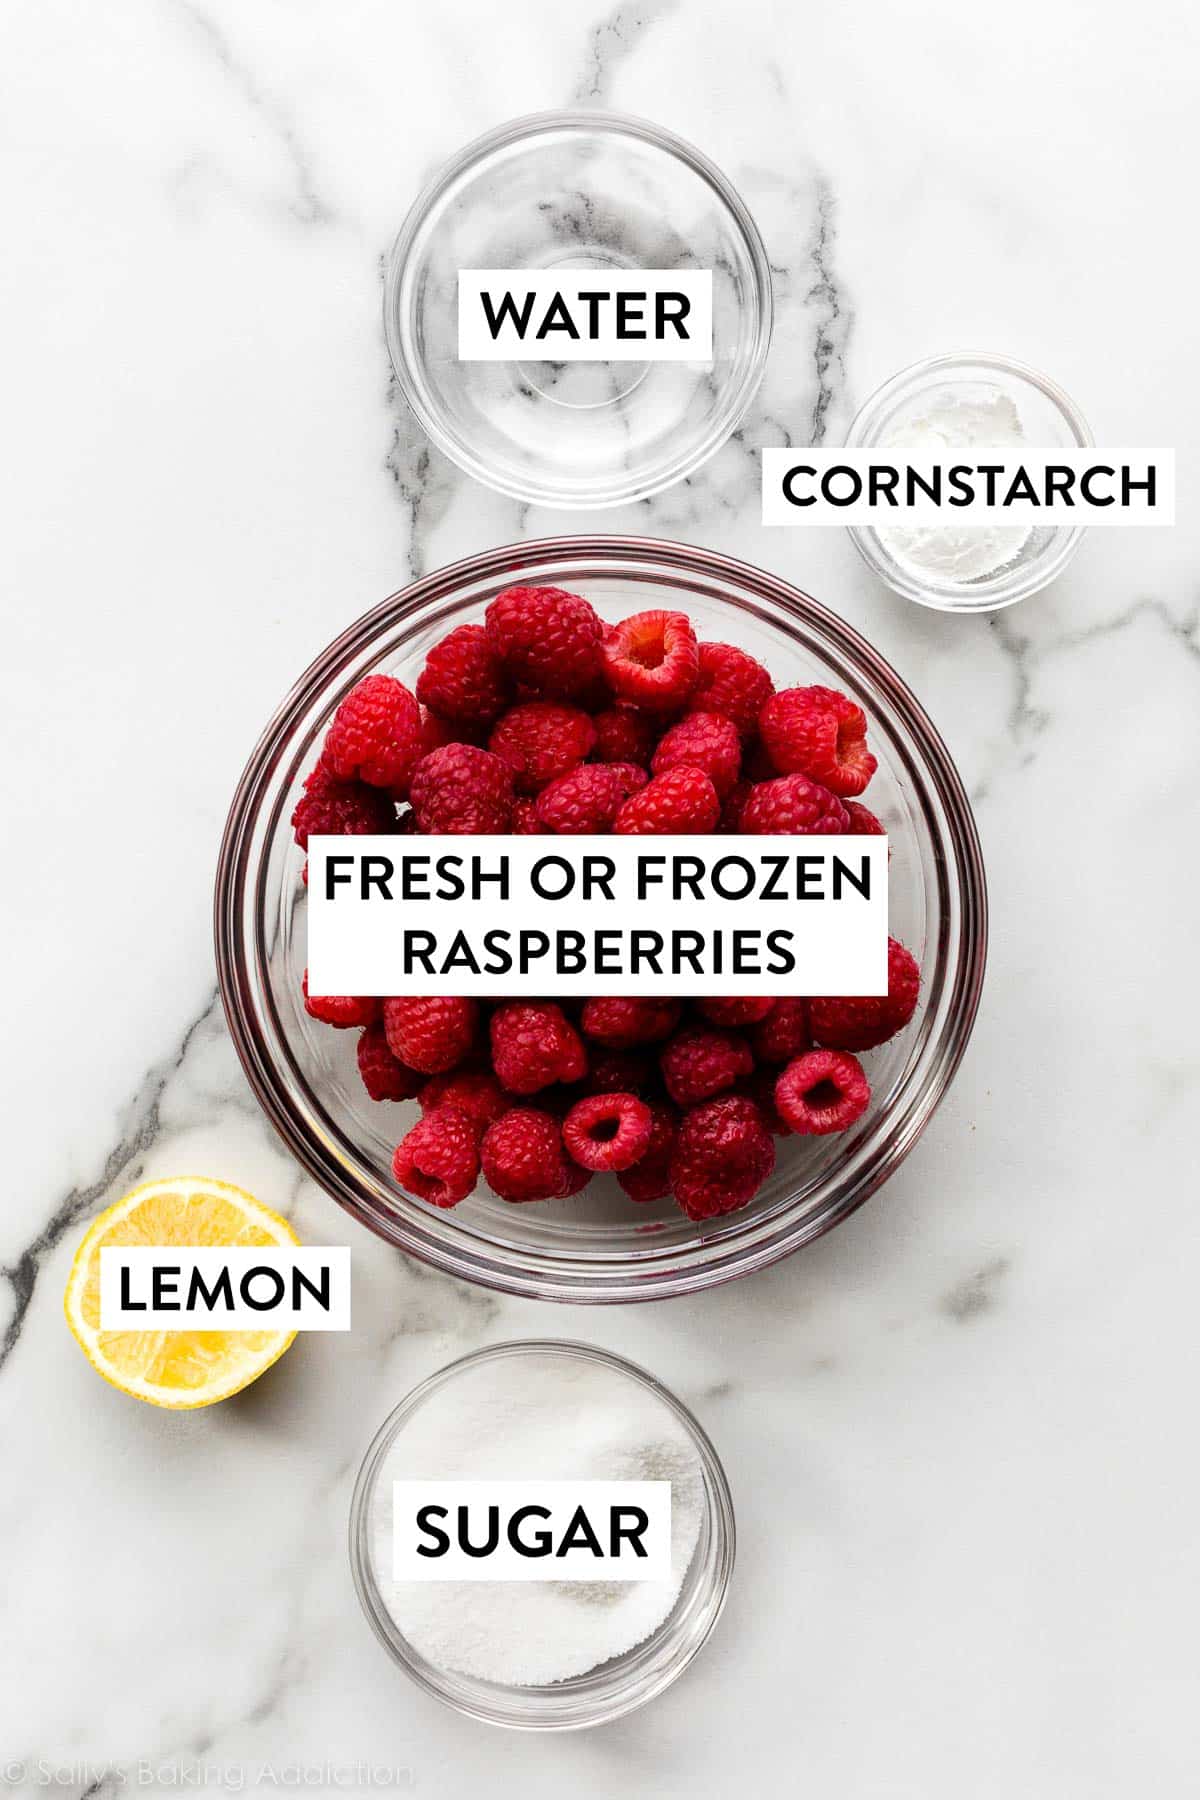 raspberries, lemon, sugar, cornstarch, and water in bowls on marble countertop.